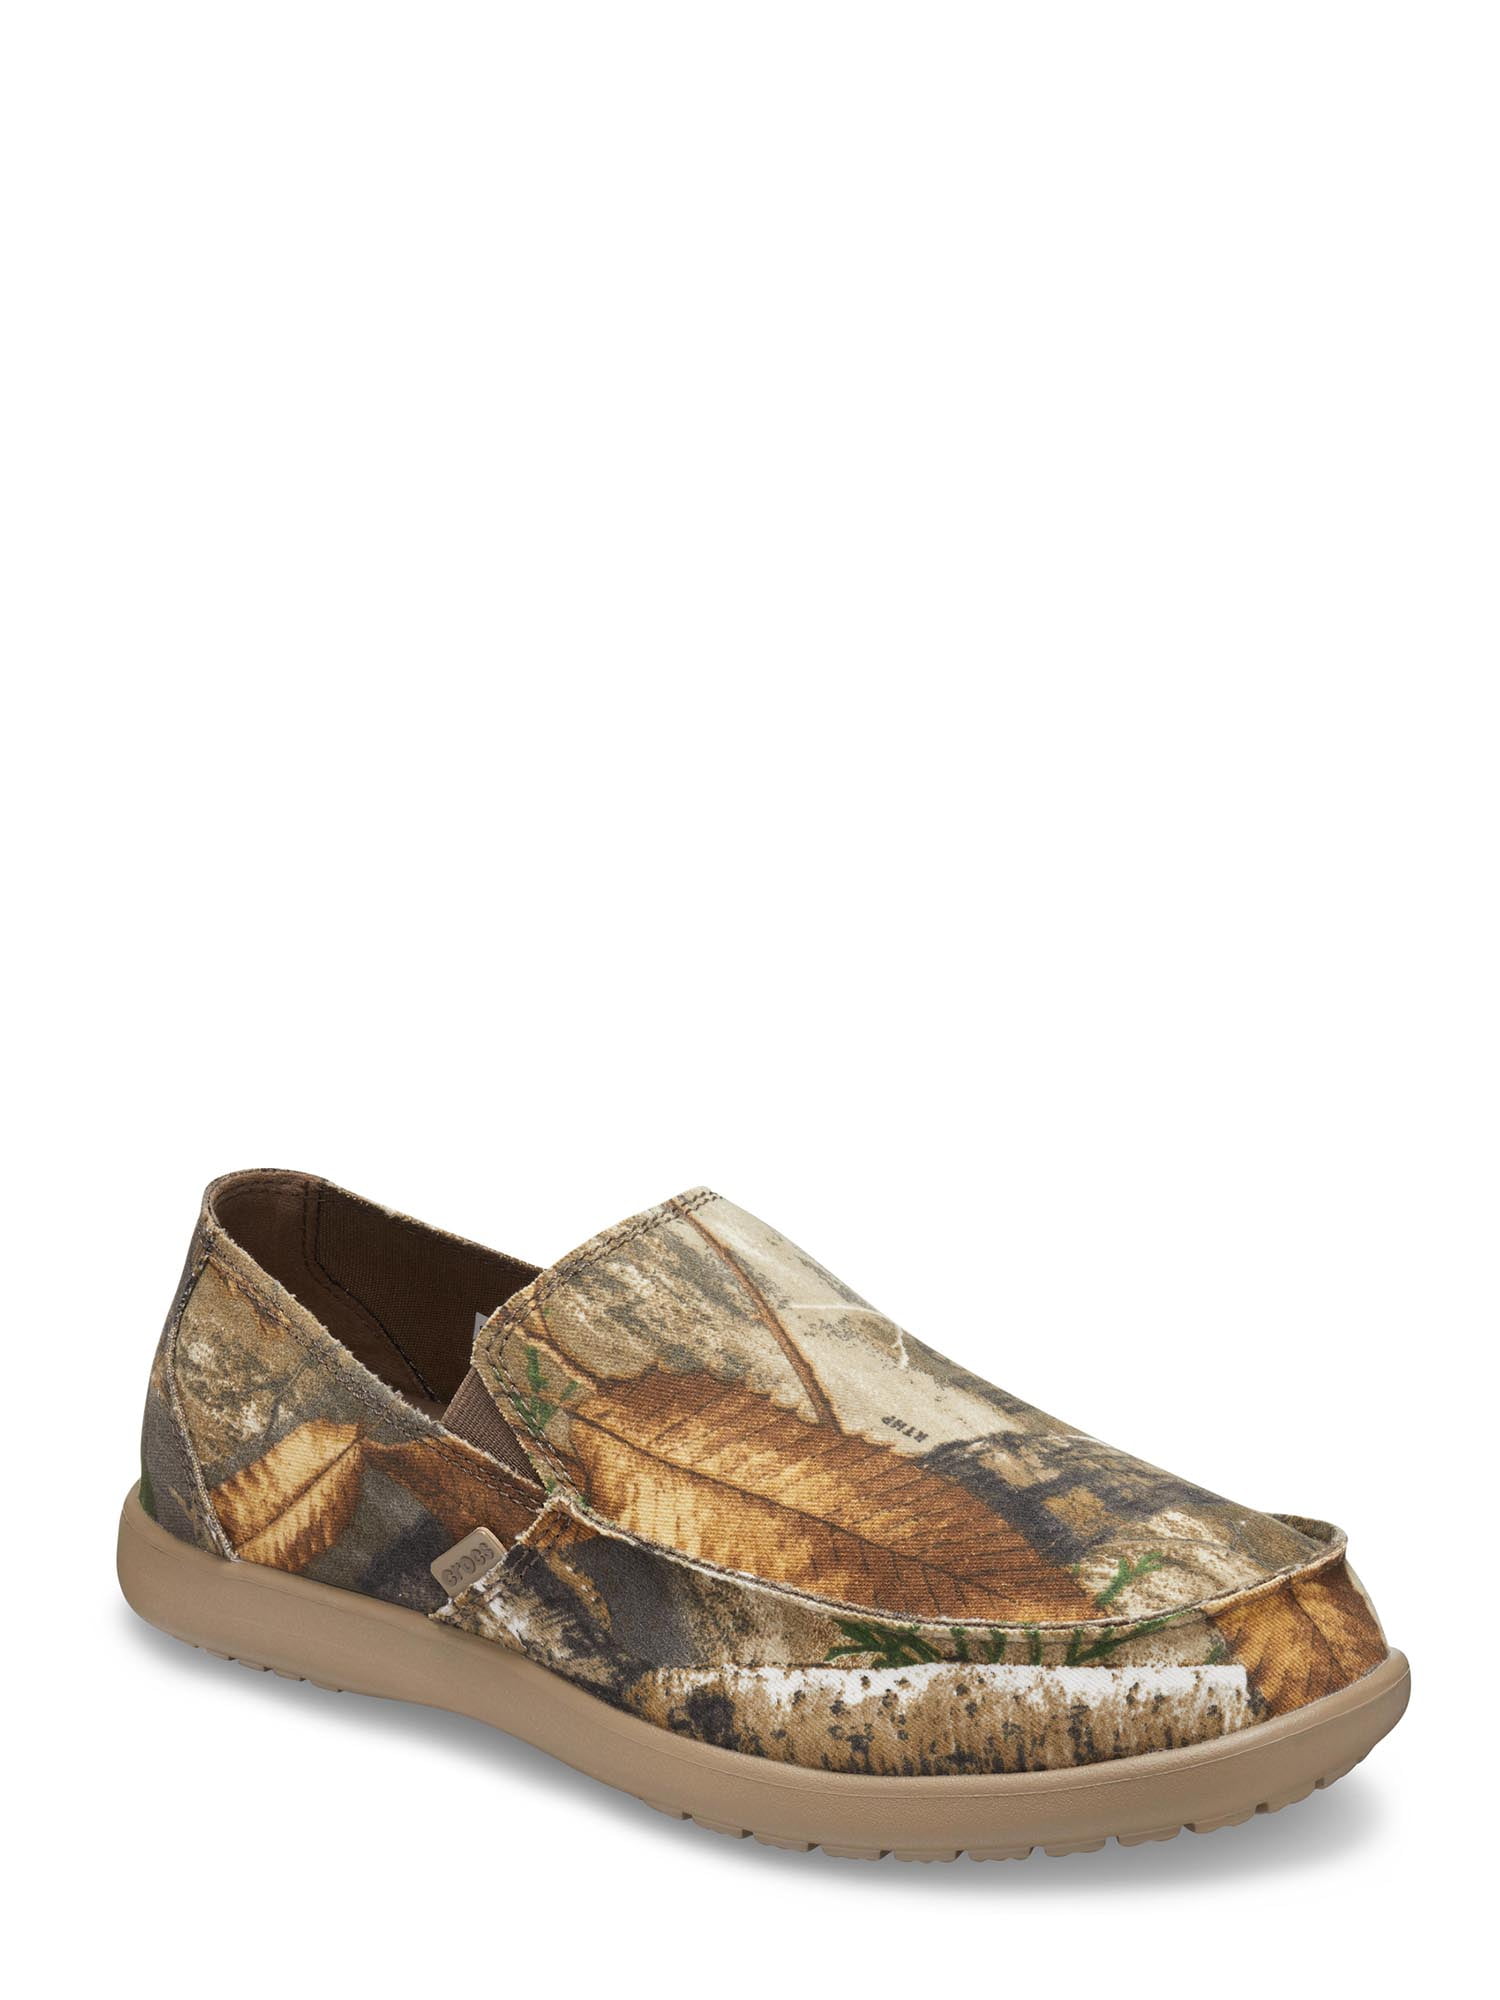 Crocs Mens Santa Cruz Realtree Xtra Camo Loafers See Sizes NWT 